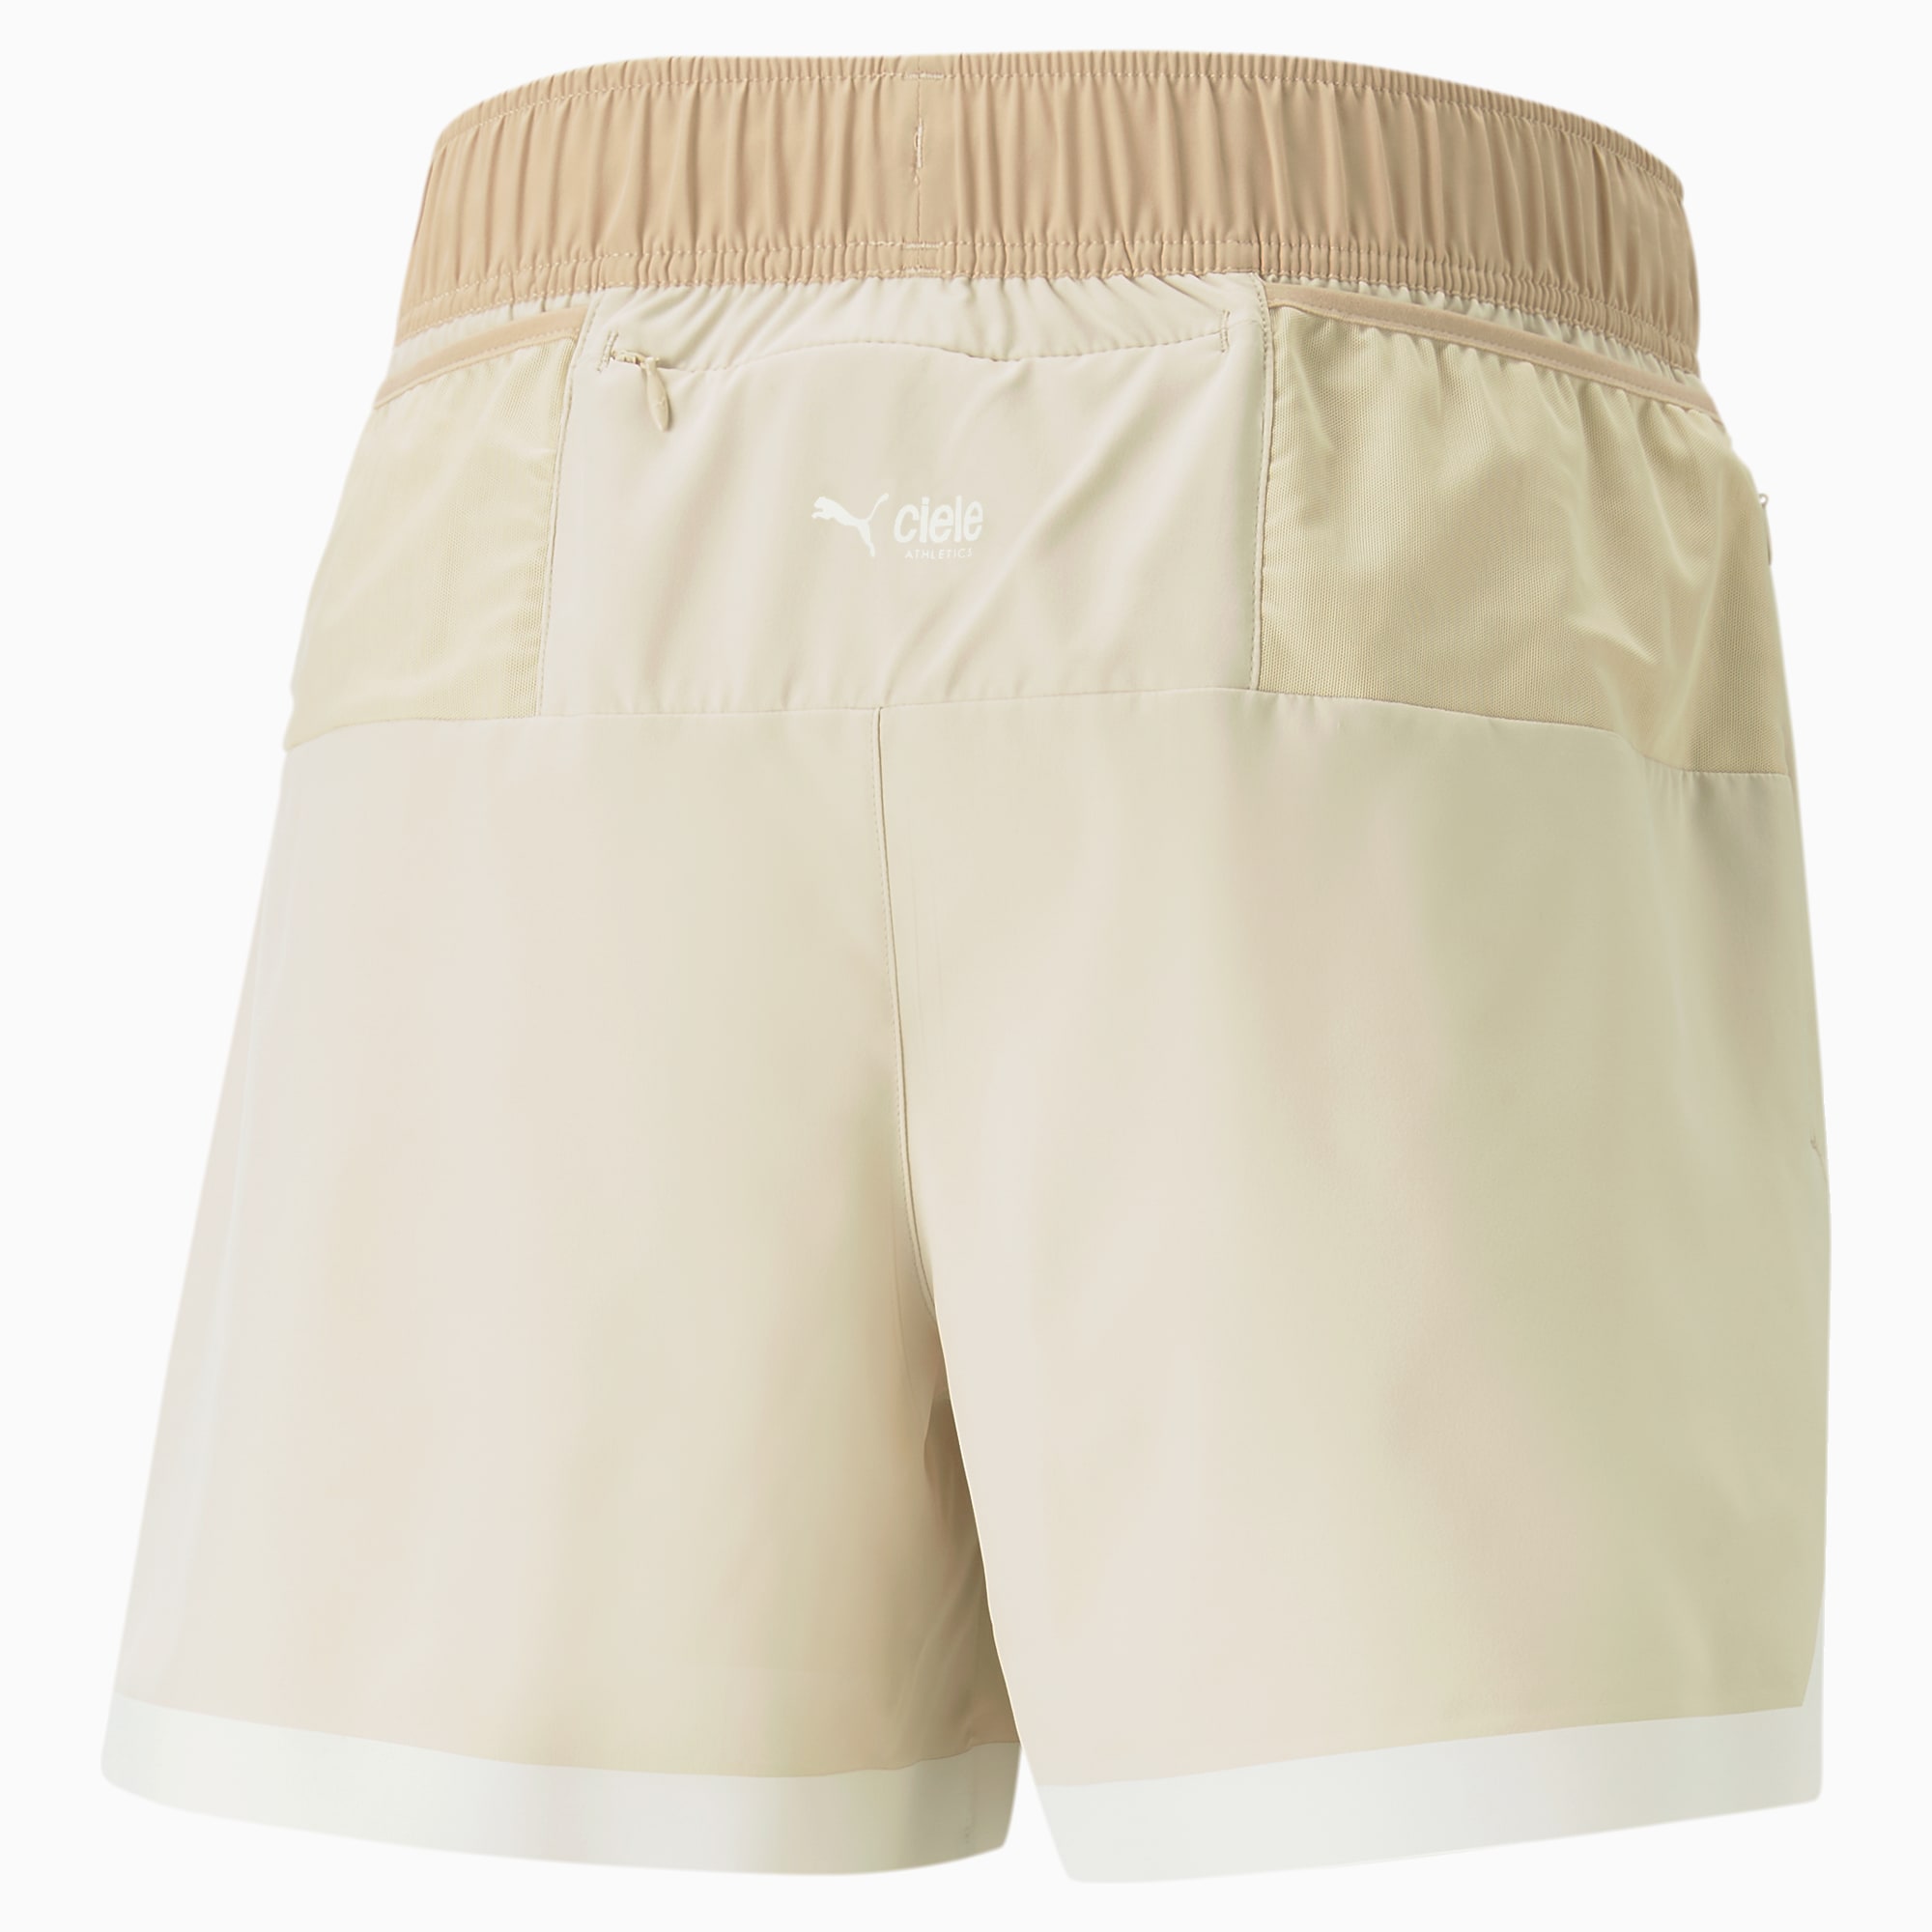 Baller Babe Shorts with Pocket - Nude Colour S-XL Activewear